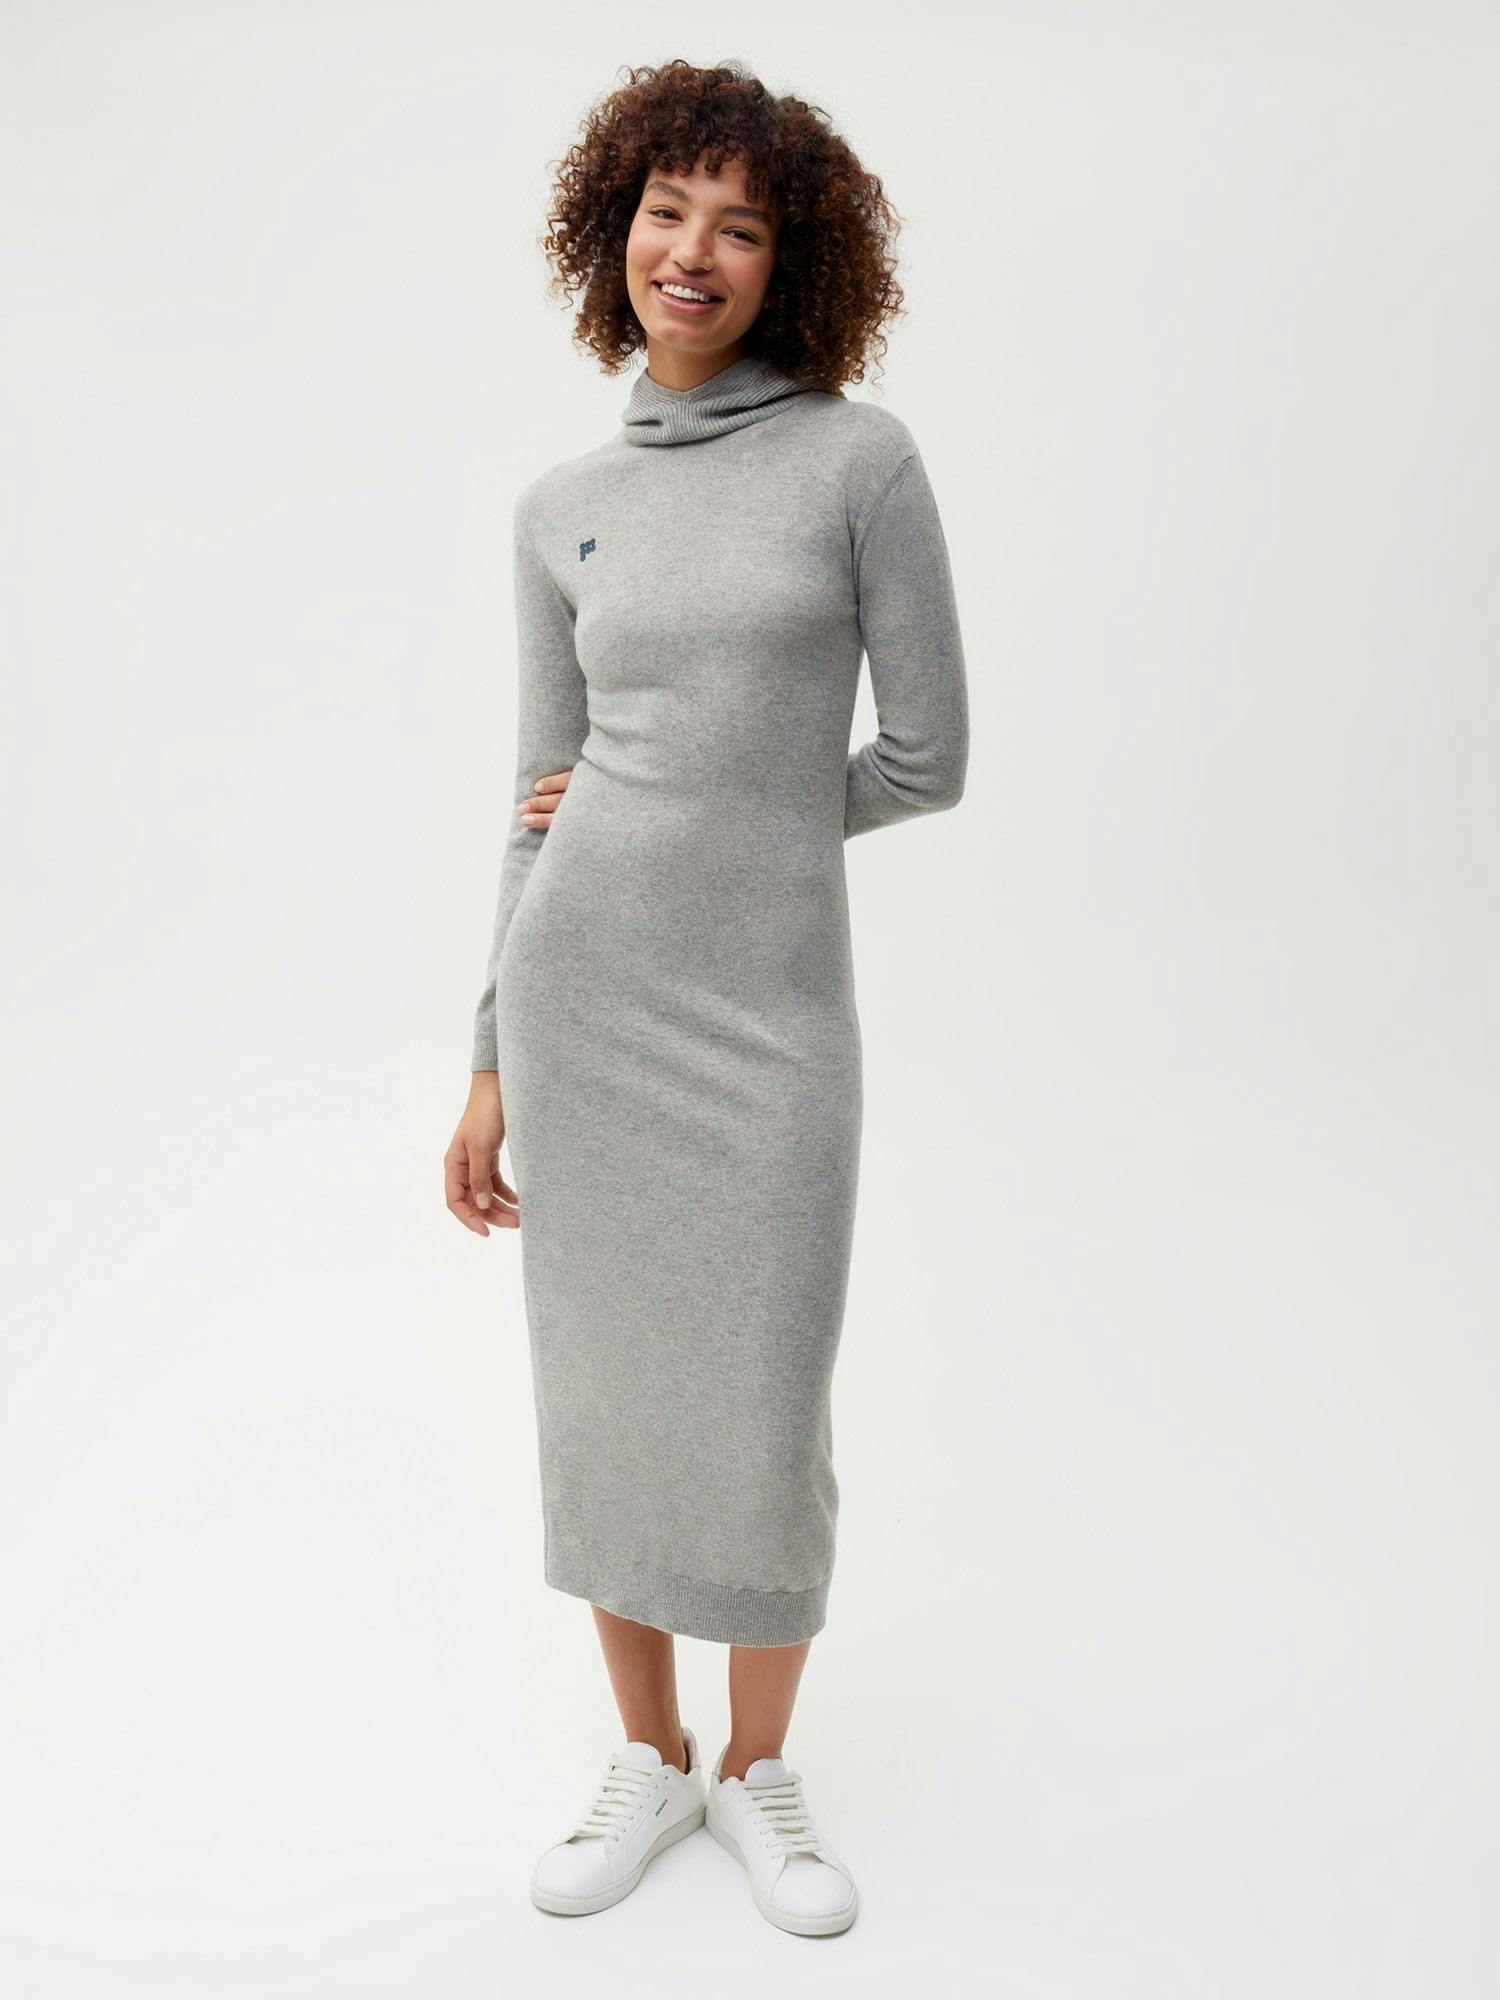 https://cdn.shopify.com/s/files/1/0035/1309/0115/products/Cashmere-Hooded-Dress-Pale-Grey-Melange-Female-1.jpg?v=1662476043